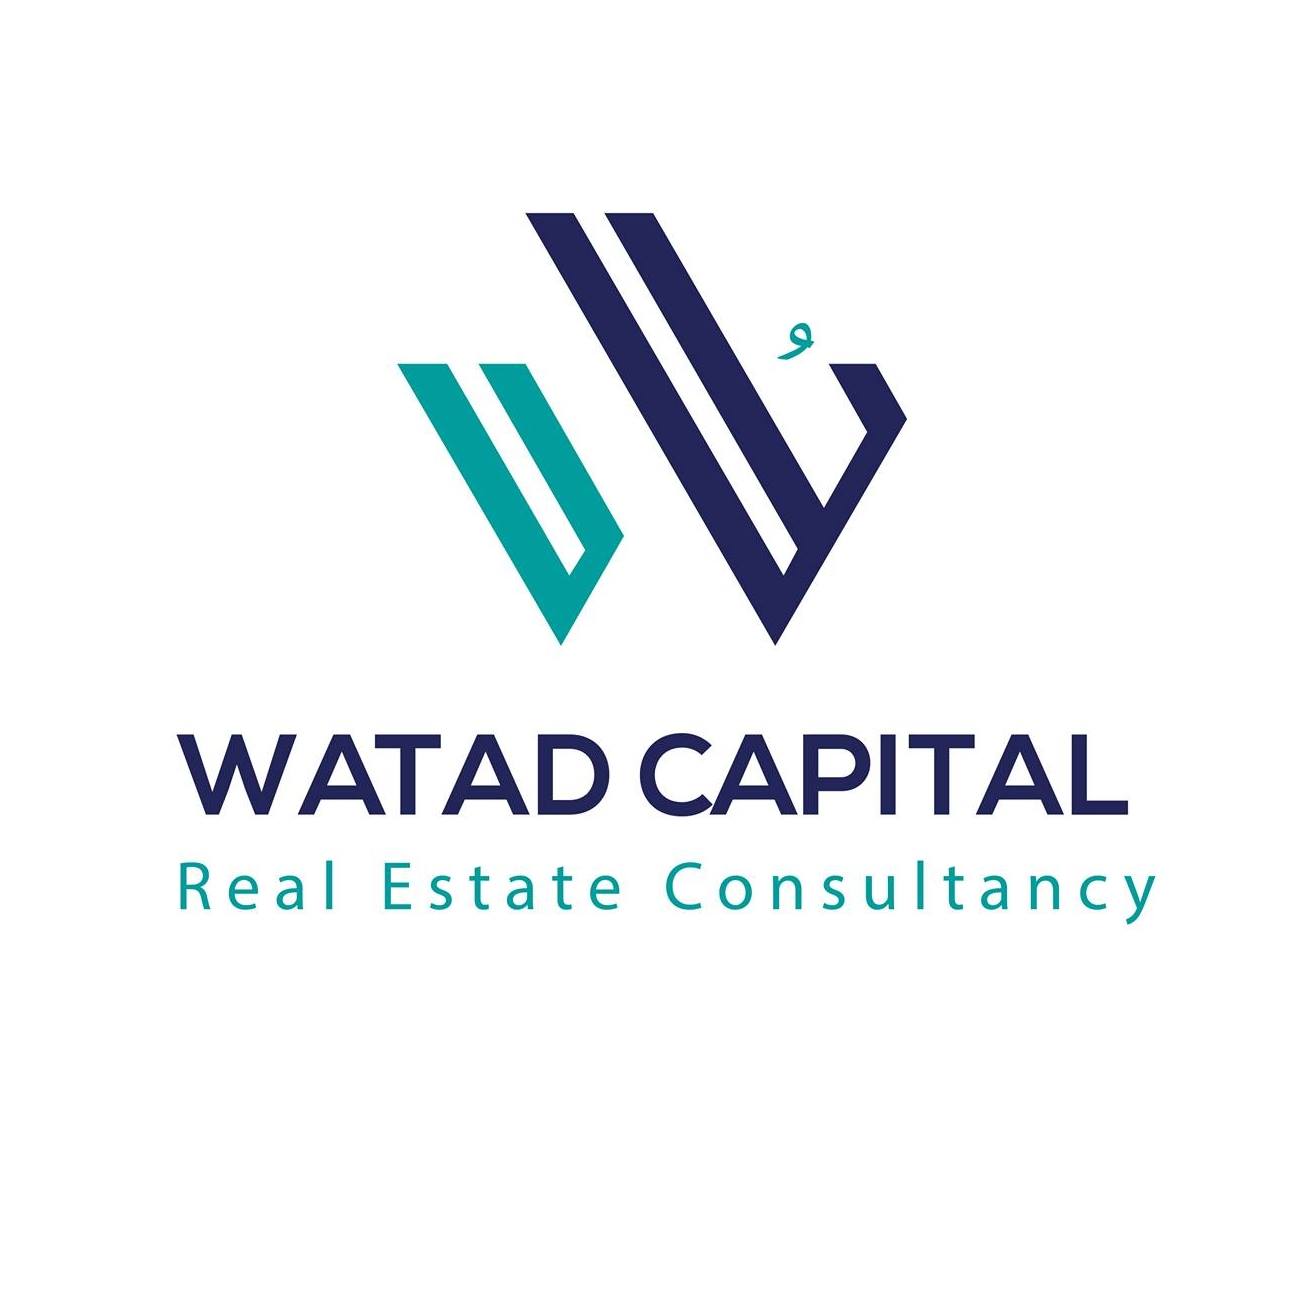 Watad Capital Real Estate